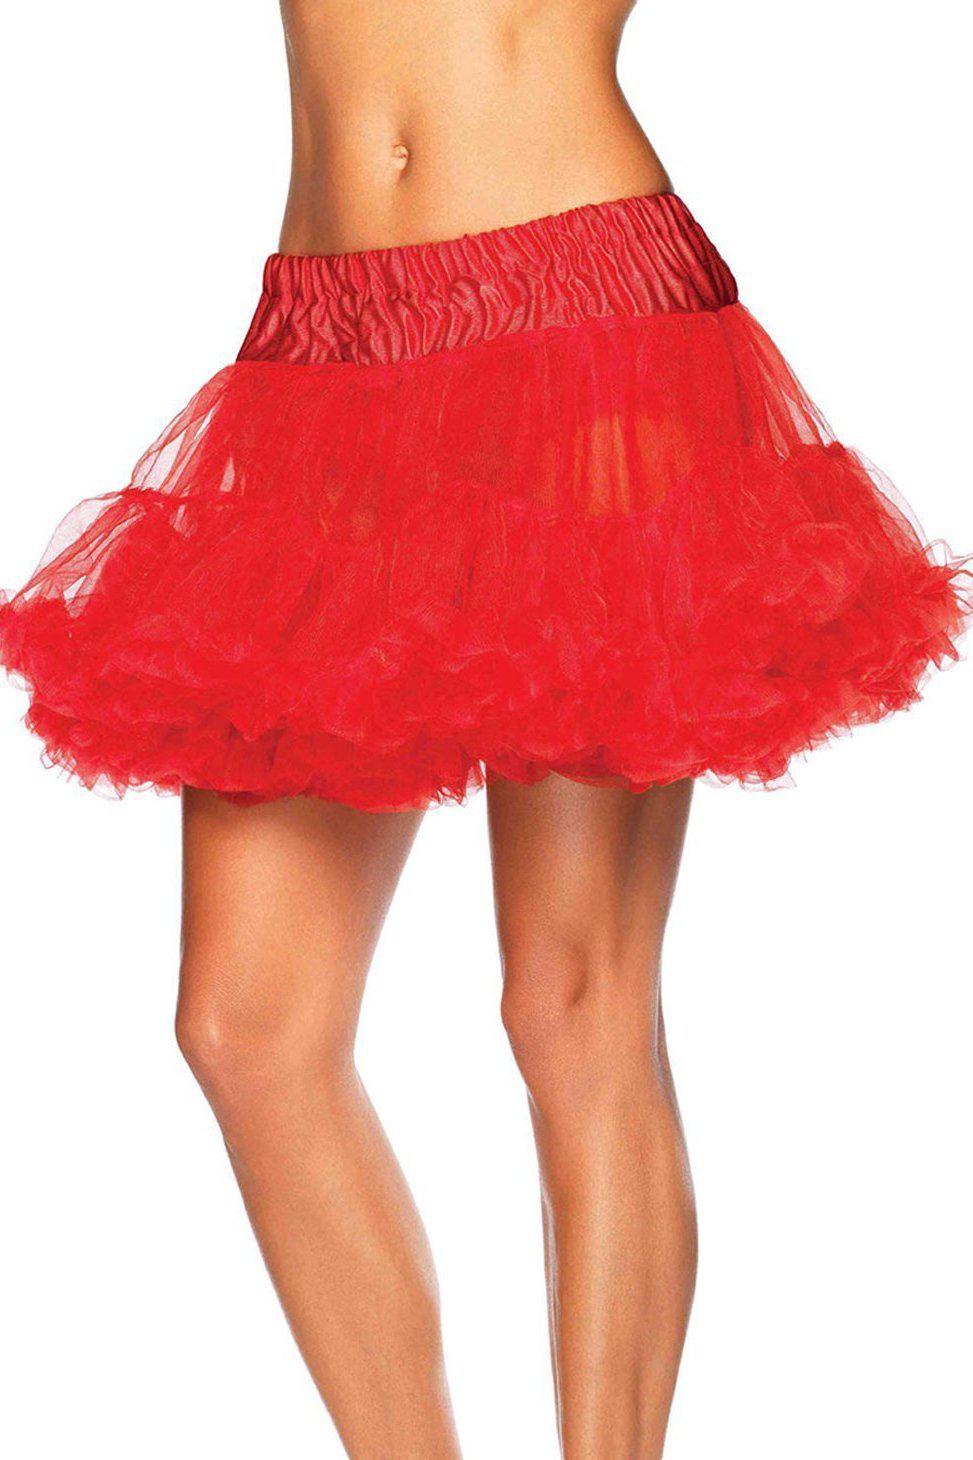 Plus Size Short Petticoat-TuTu + Petticoat-Leg Avenue-Red-1/2XL-SEXYSHOES.COM